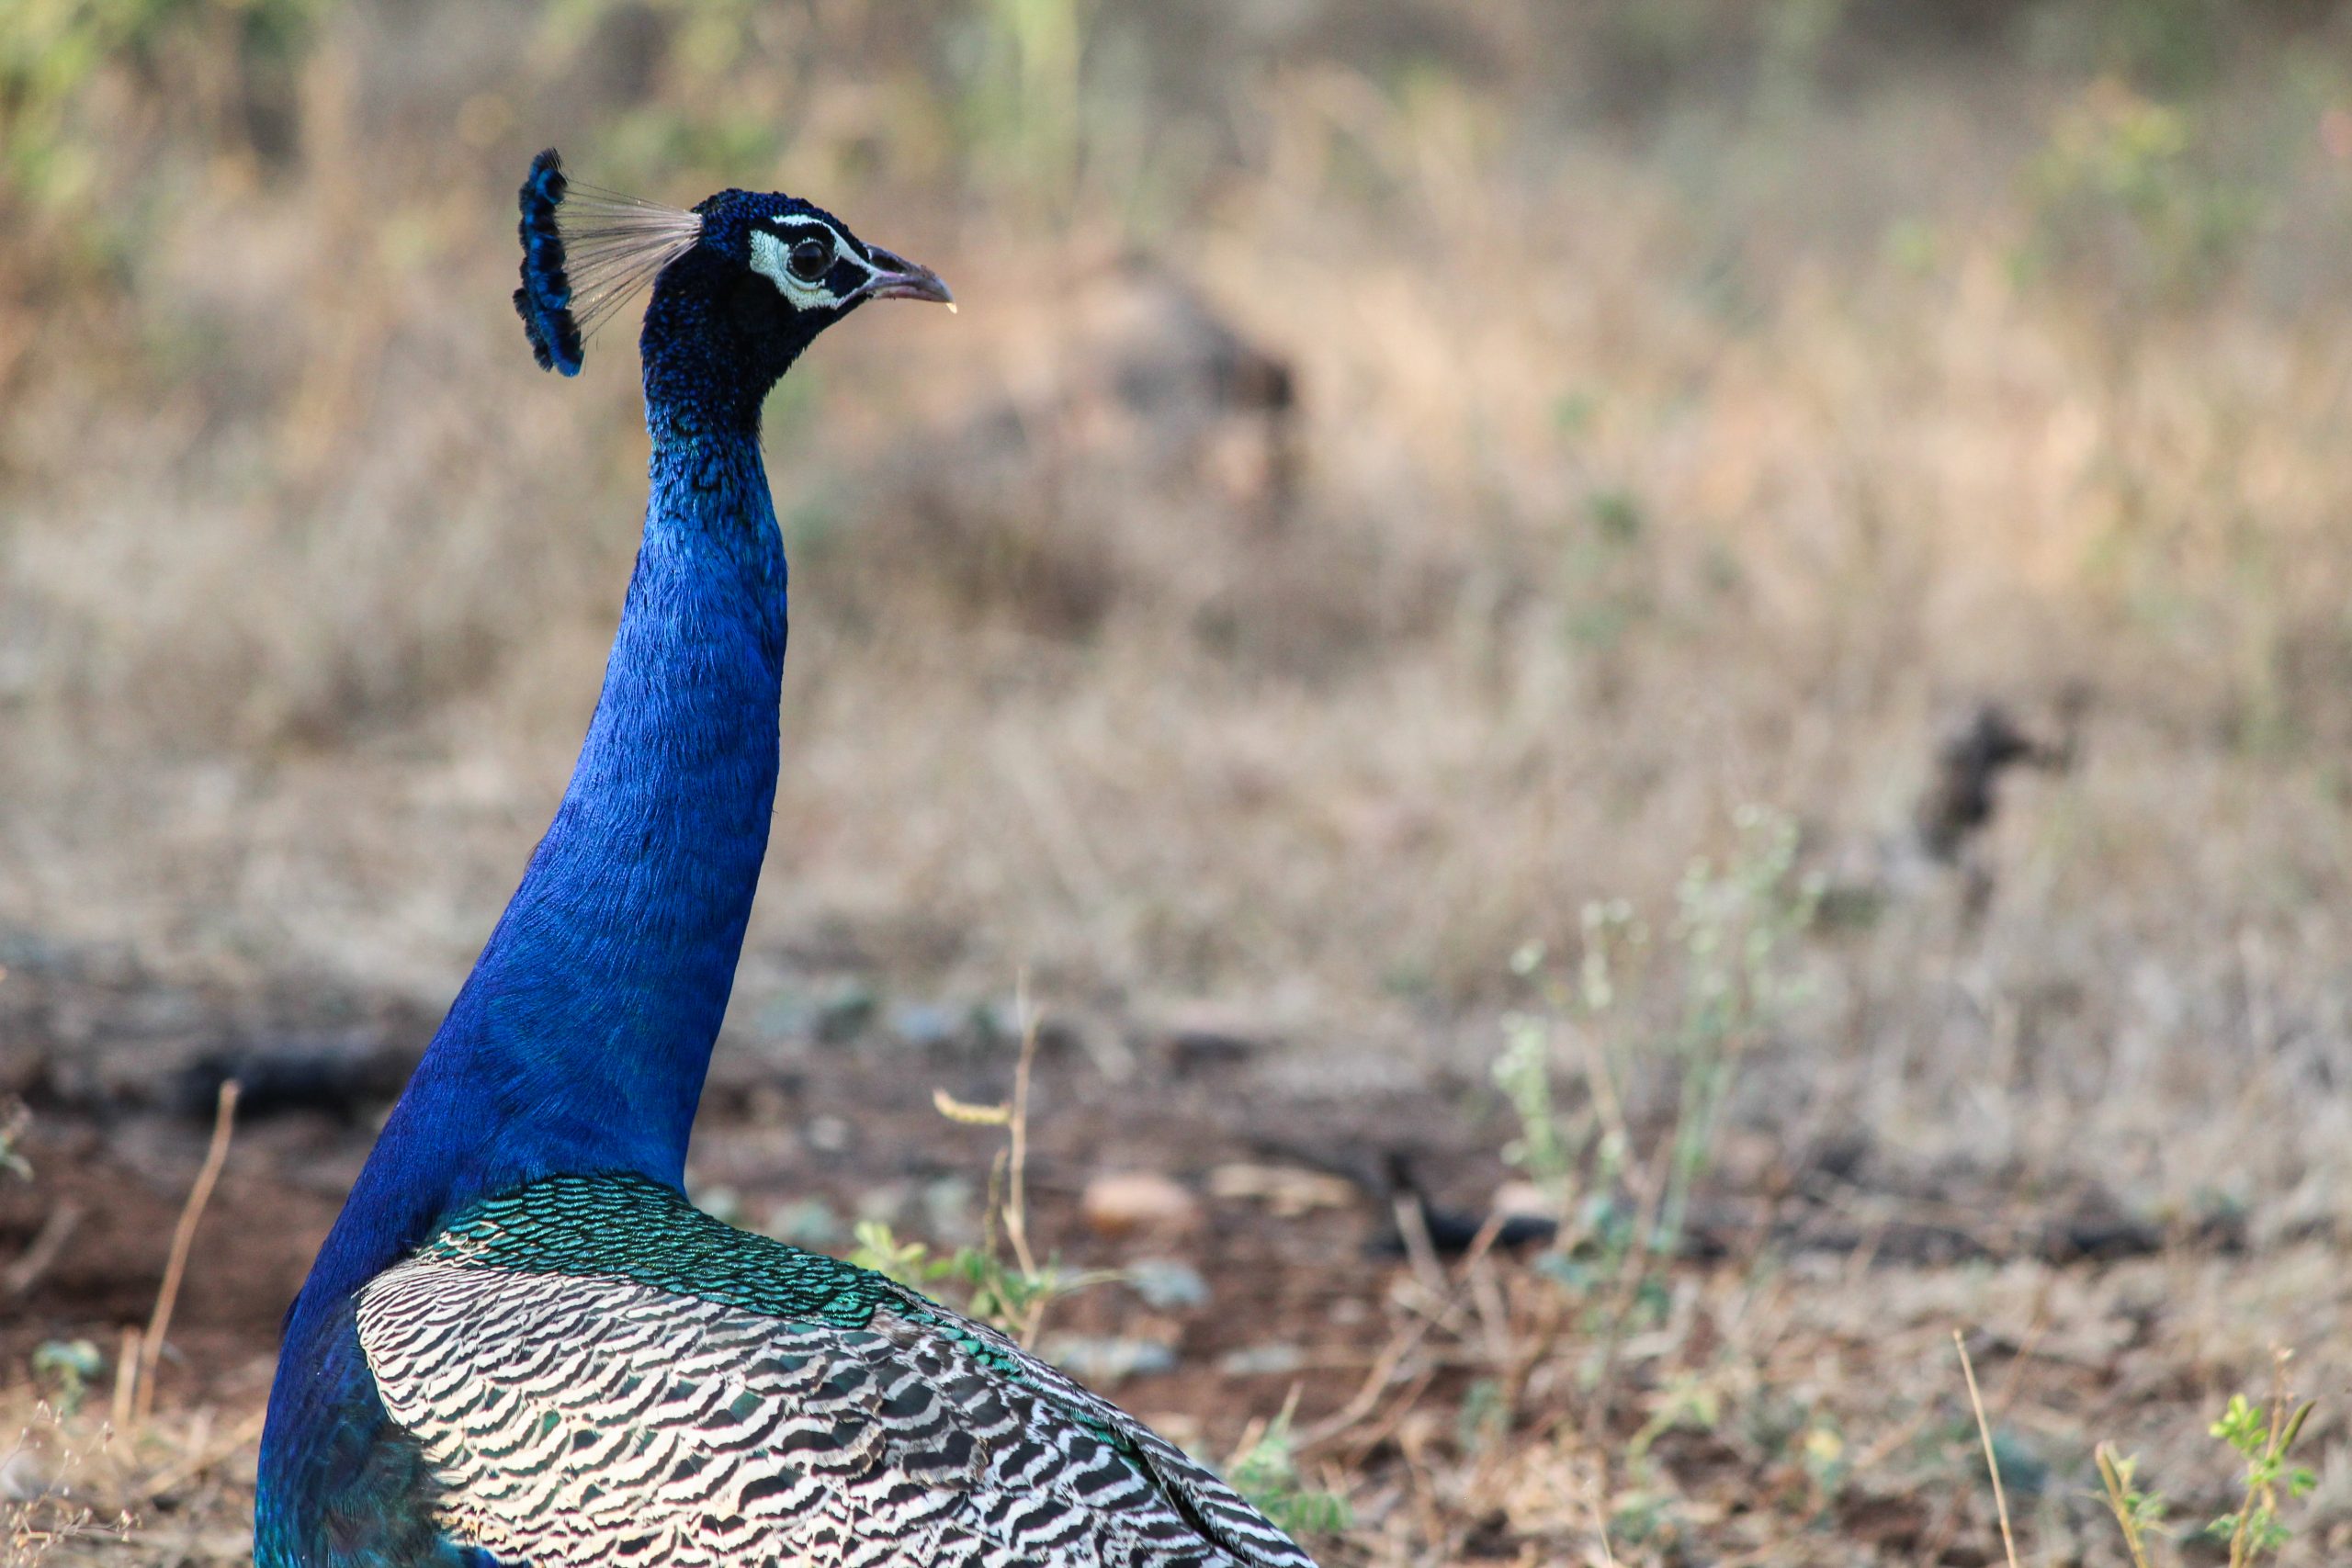 An elegant peacock.